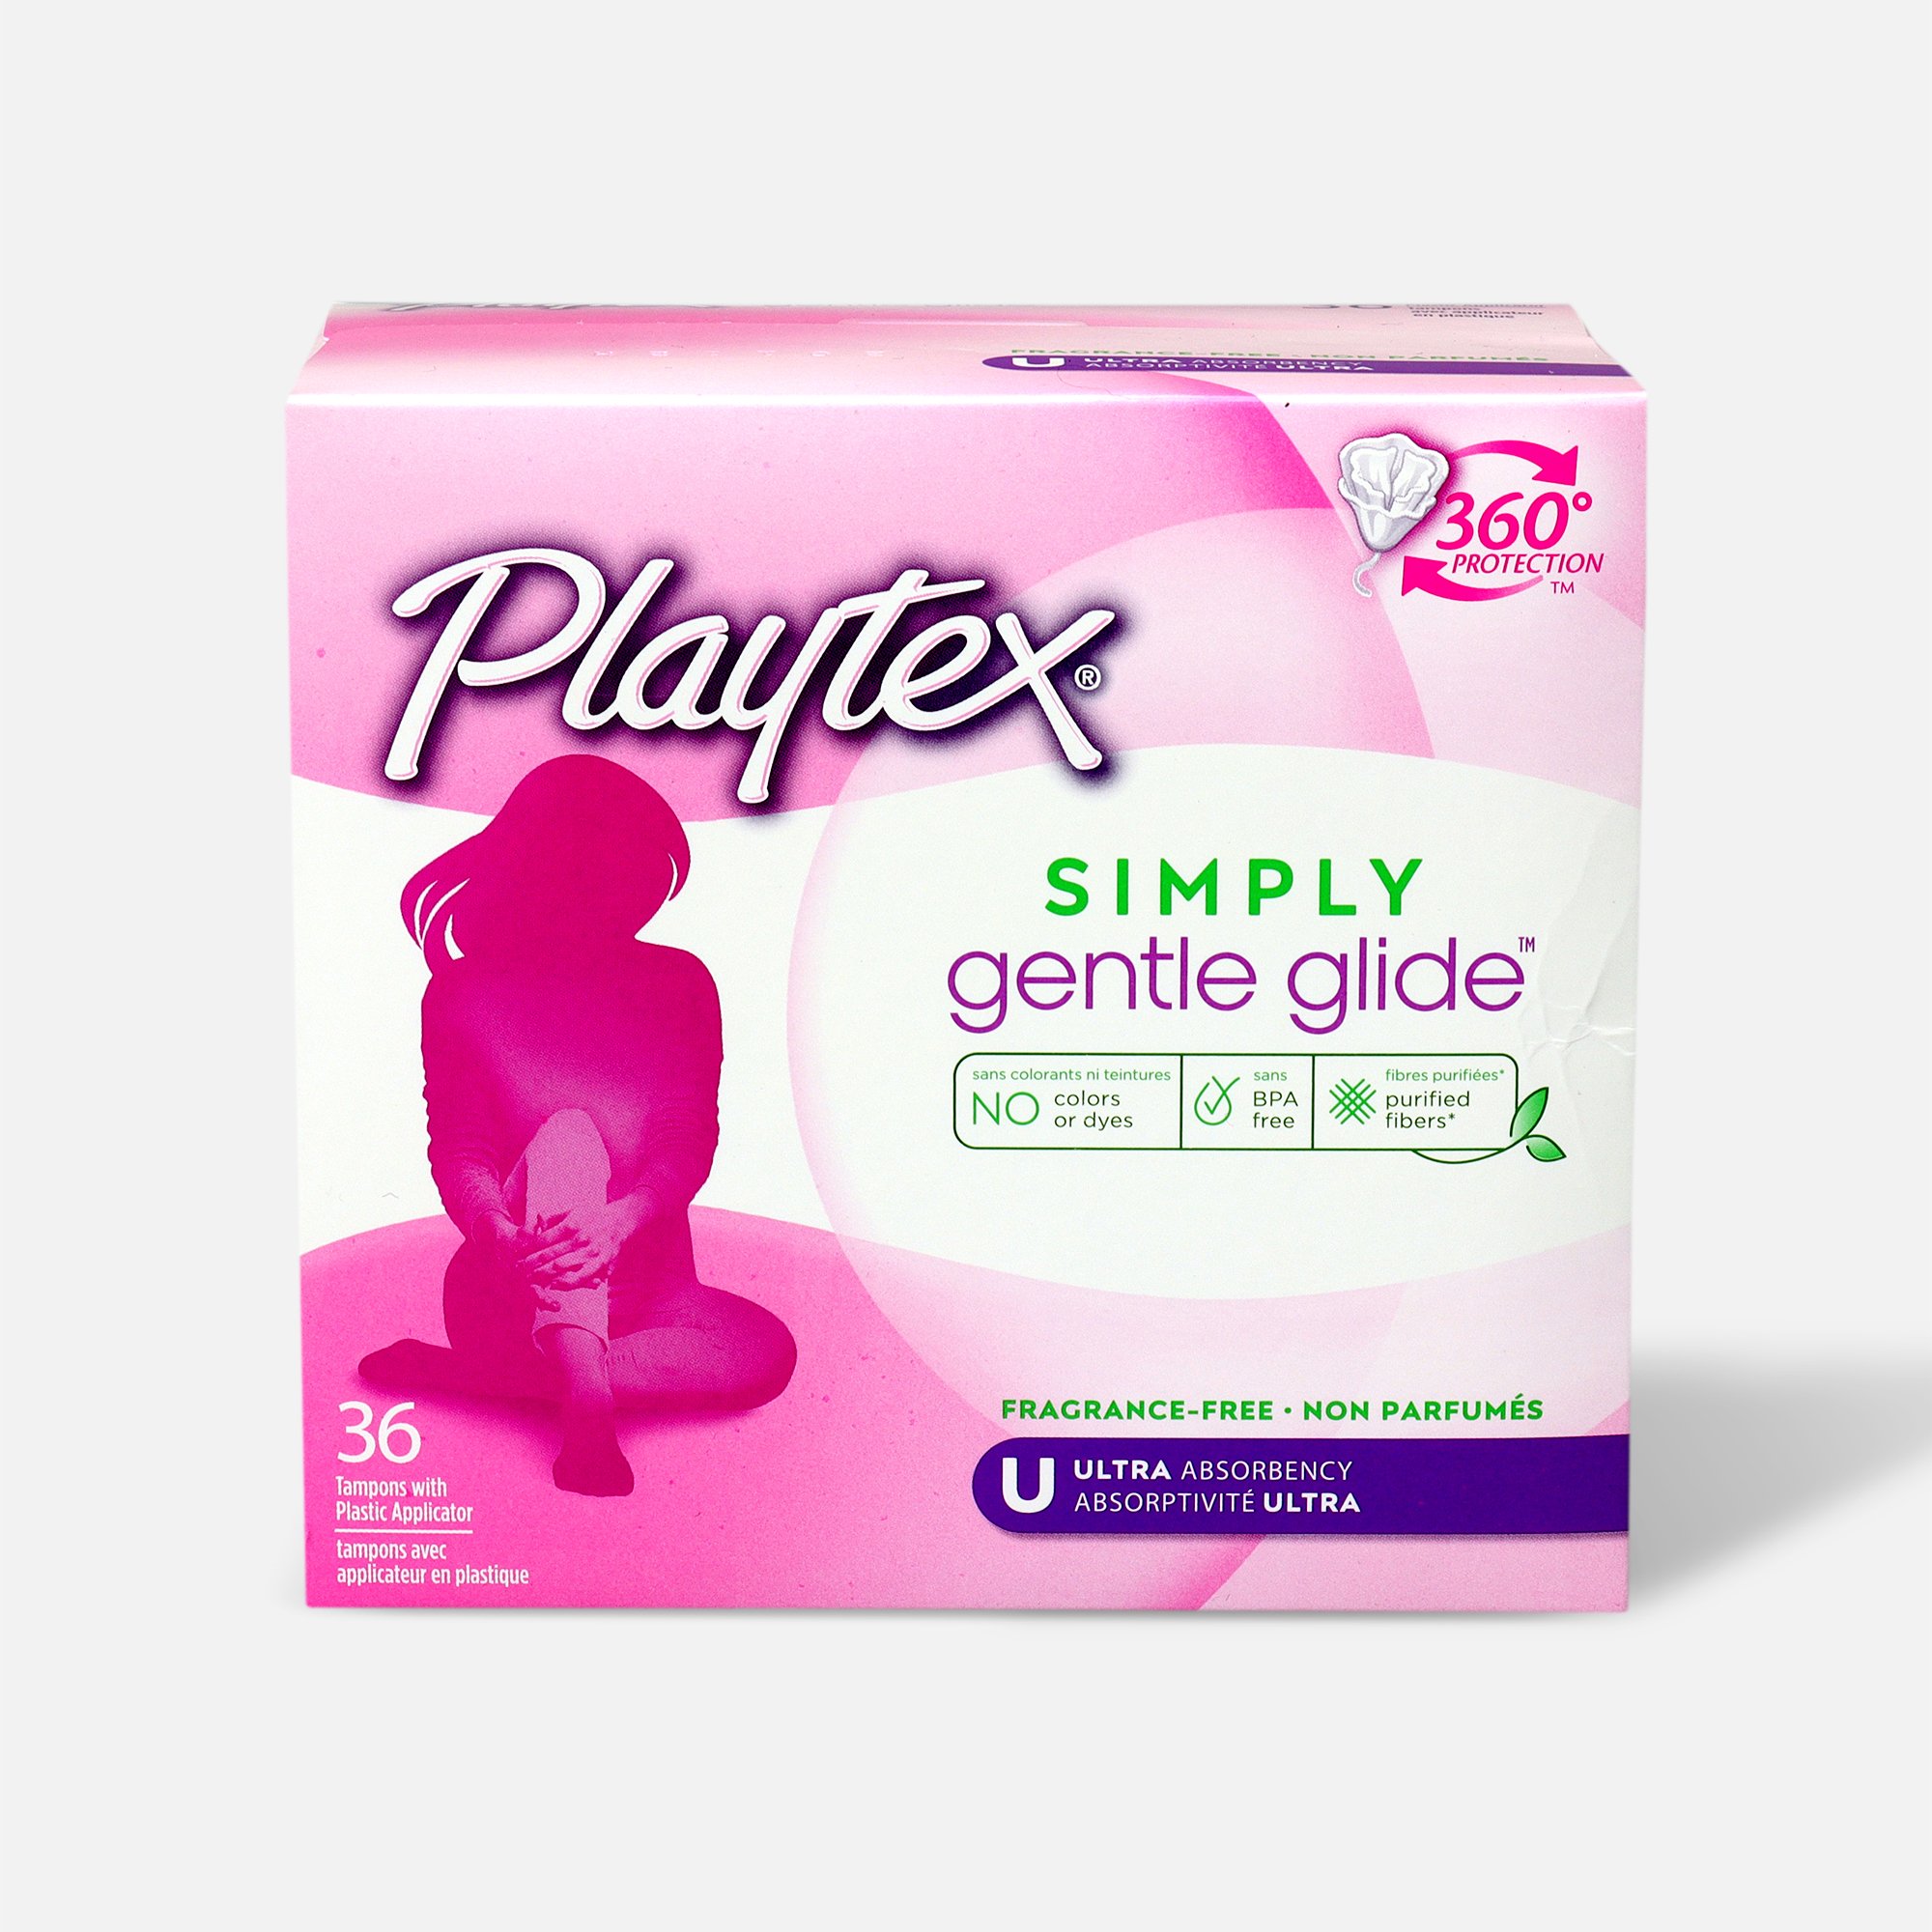 Playtex, Playtex Sport Tampons with Plastic Applicators Unscented  Multi-Pack, 36 Each, Shop Playtex, Playtex Sport Tampons with Plastic  Applicators Unscented Multi-Pack, 36 Each Online